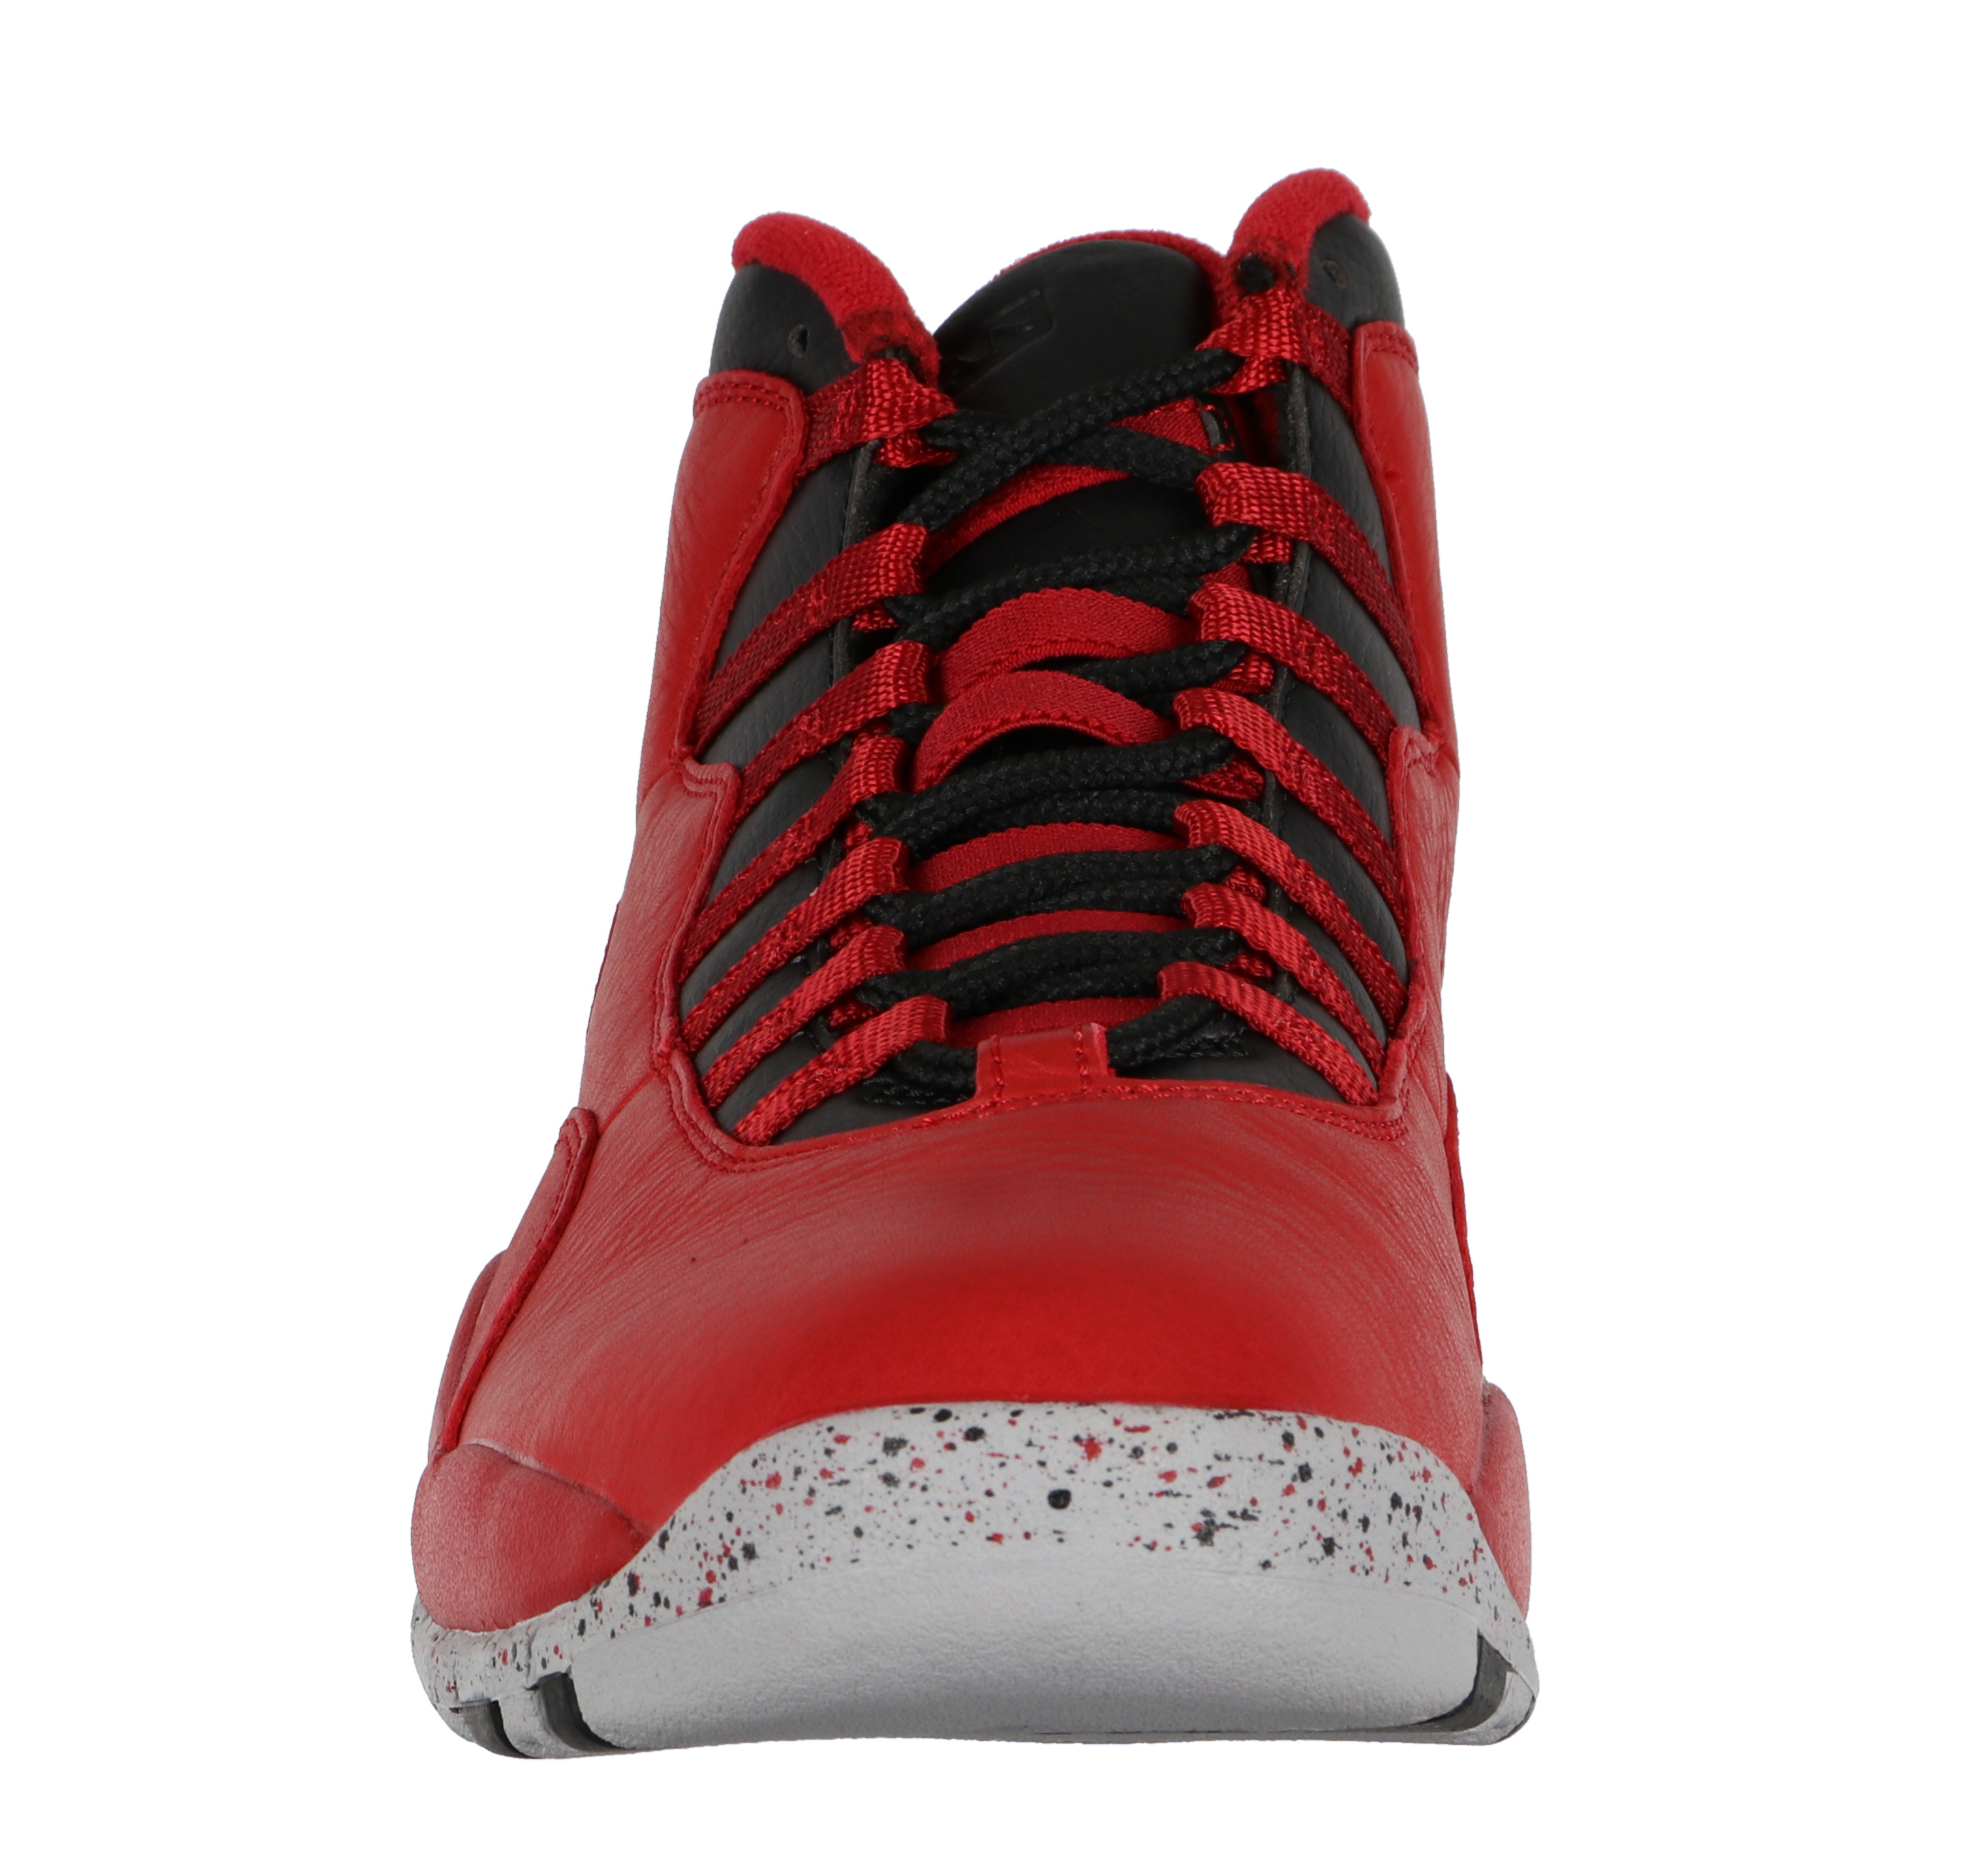 Jordan Men's Retro 10 30th Basketball Shoes sz 9.5 Red Black Bulls Over Broadway Edition - image 4 of 7